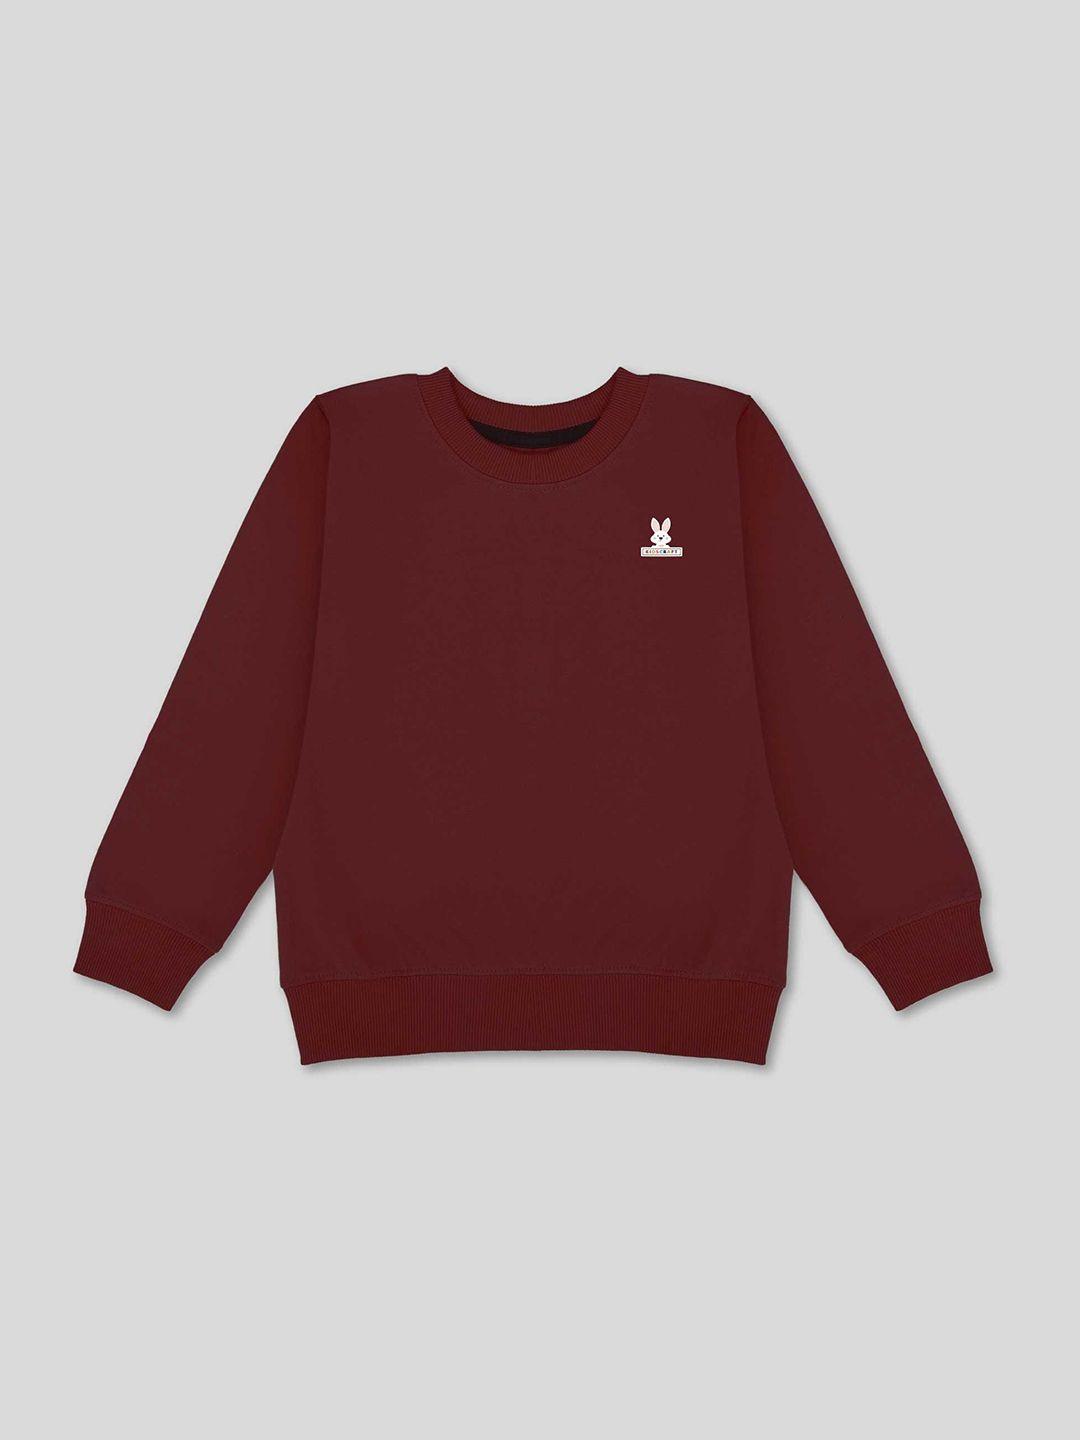 kidscraft-boys-maroon-sweatshirt